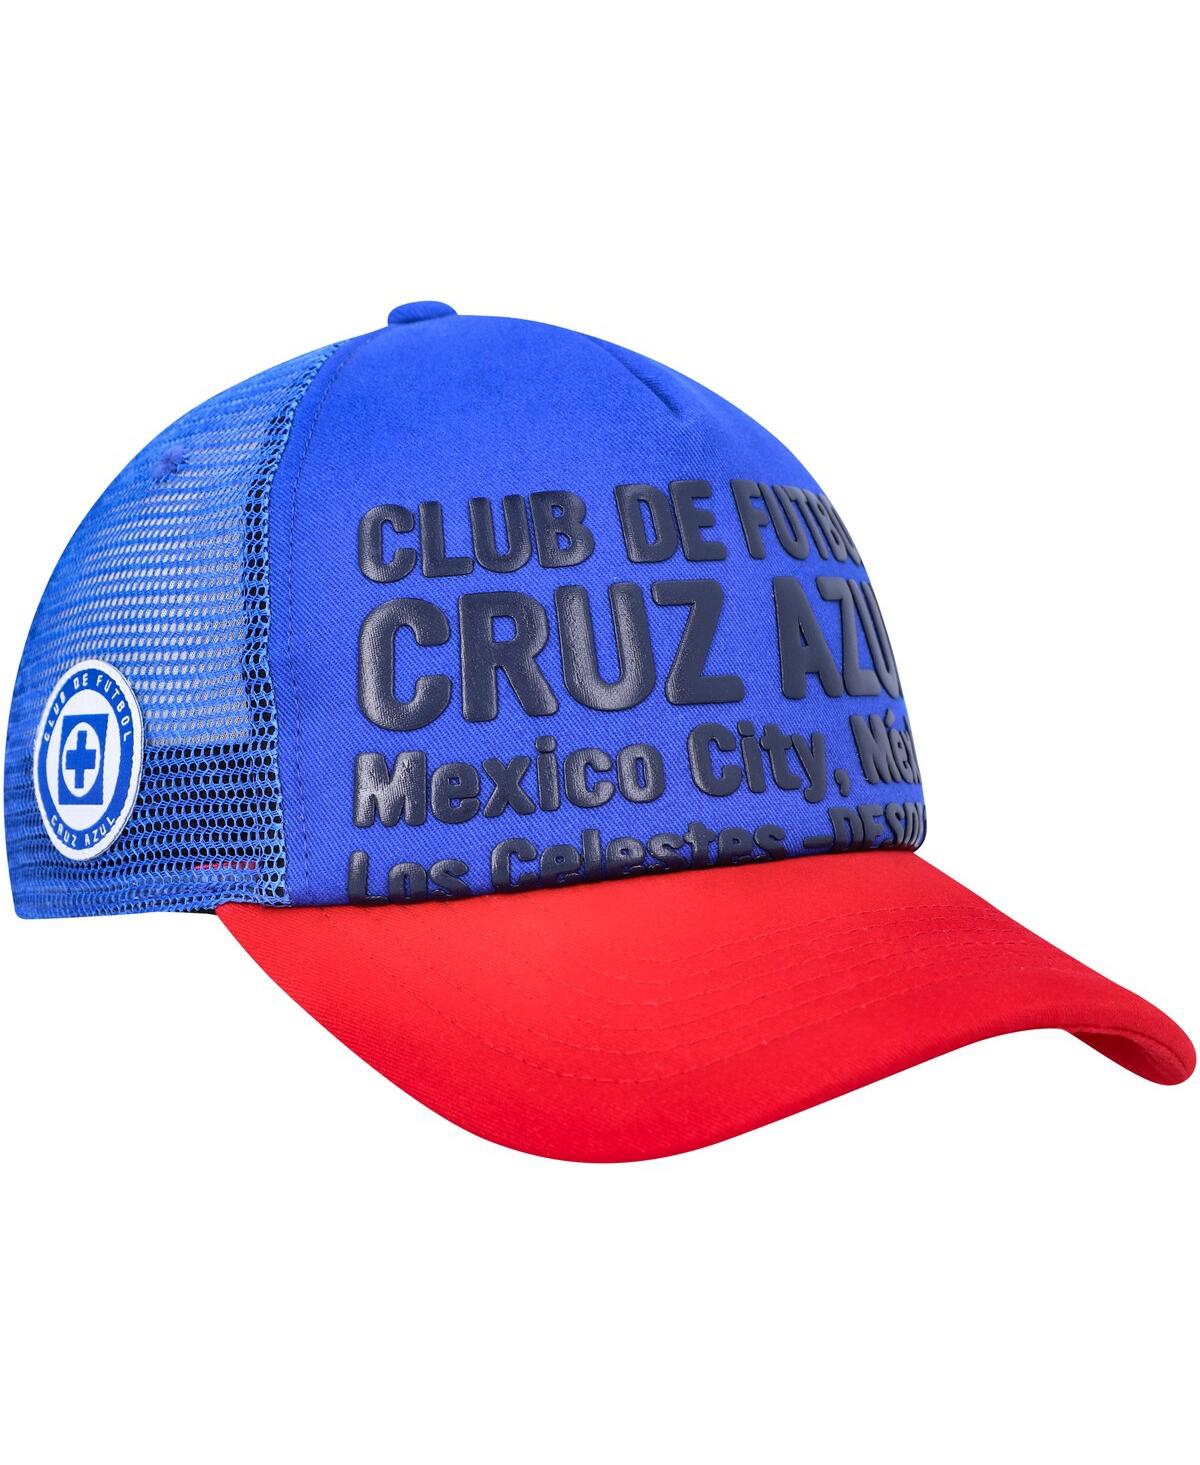 Men's Blue Cruz Azul Club Gold Adjustable Hat - Blue